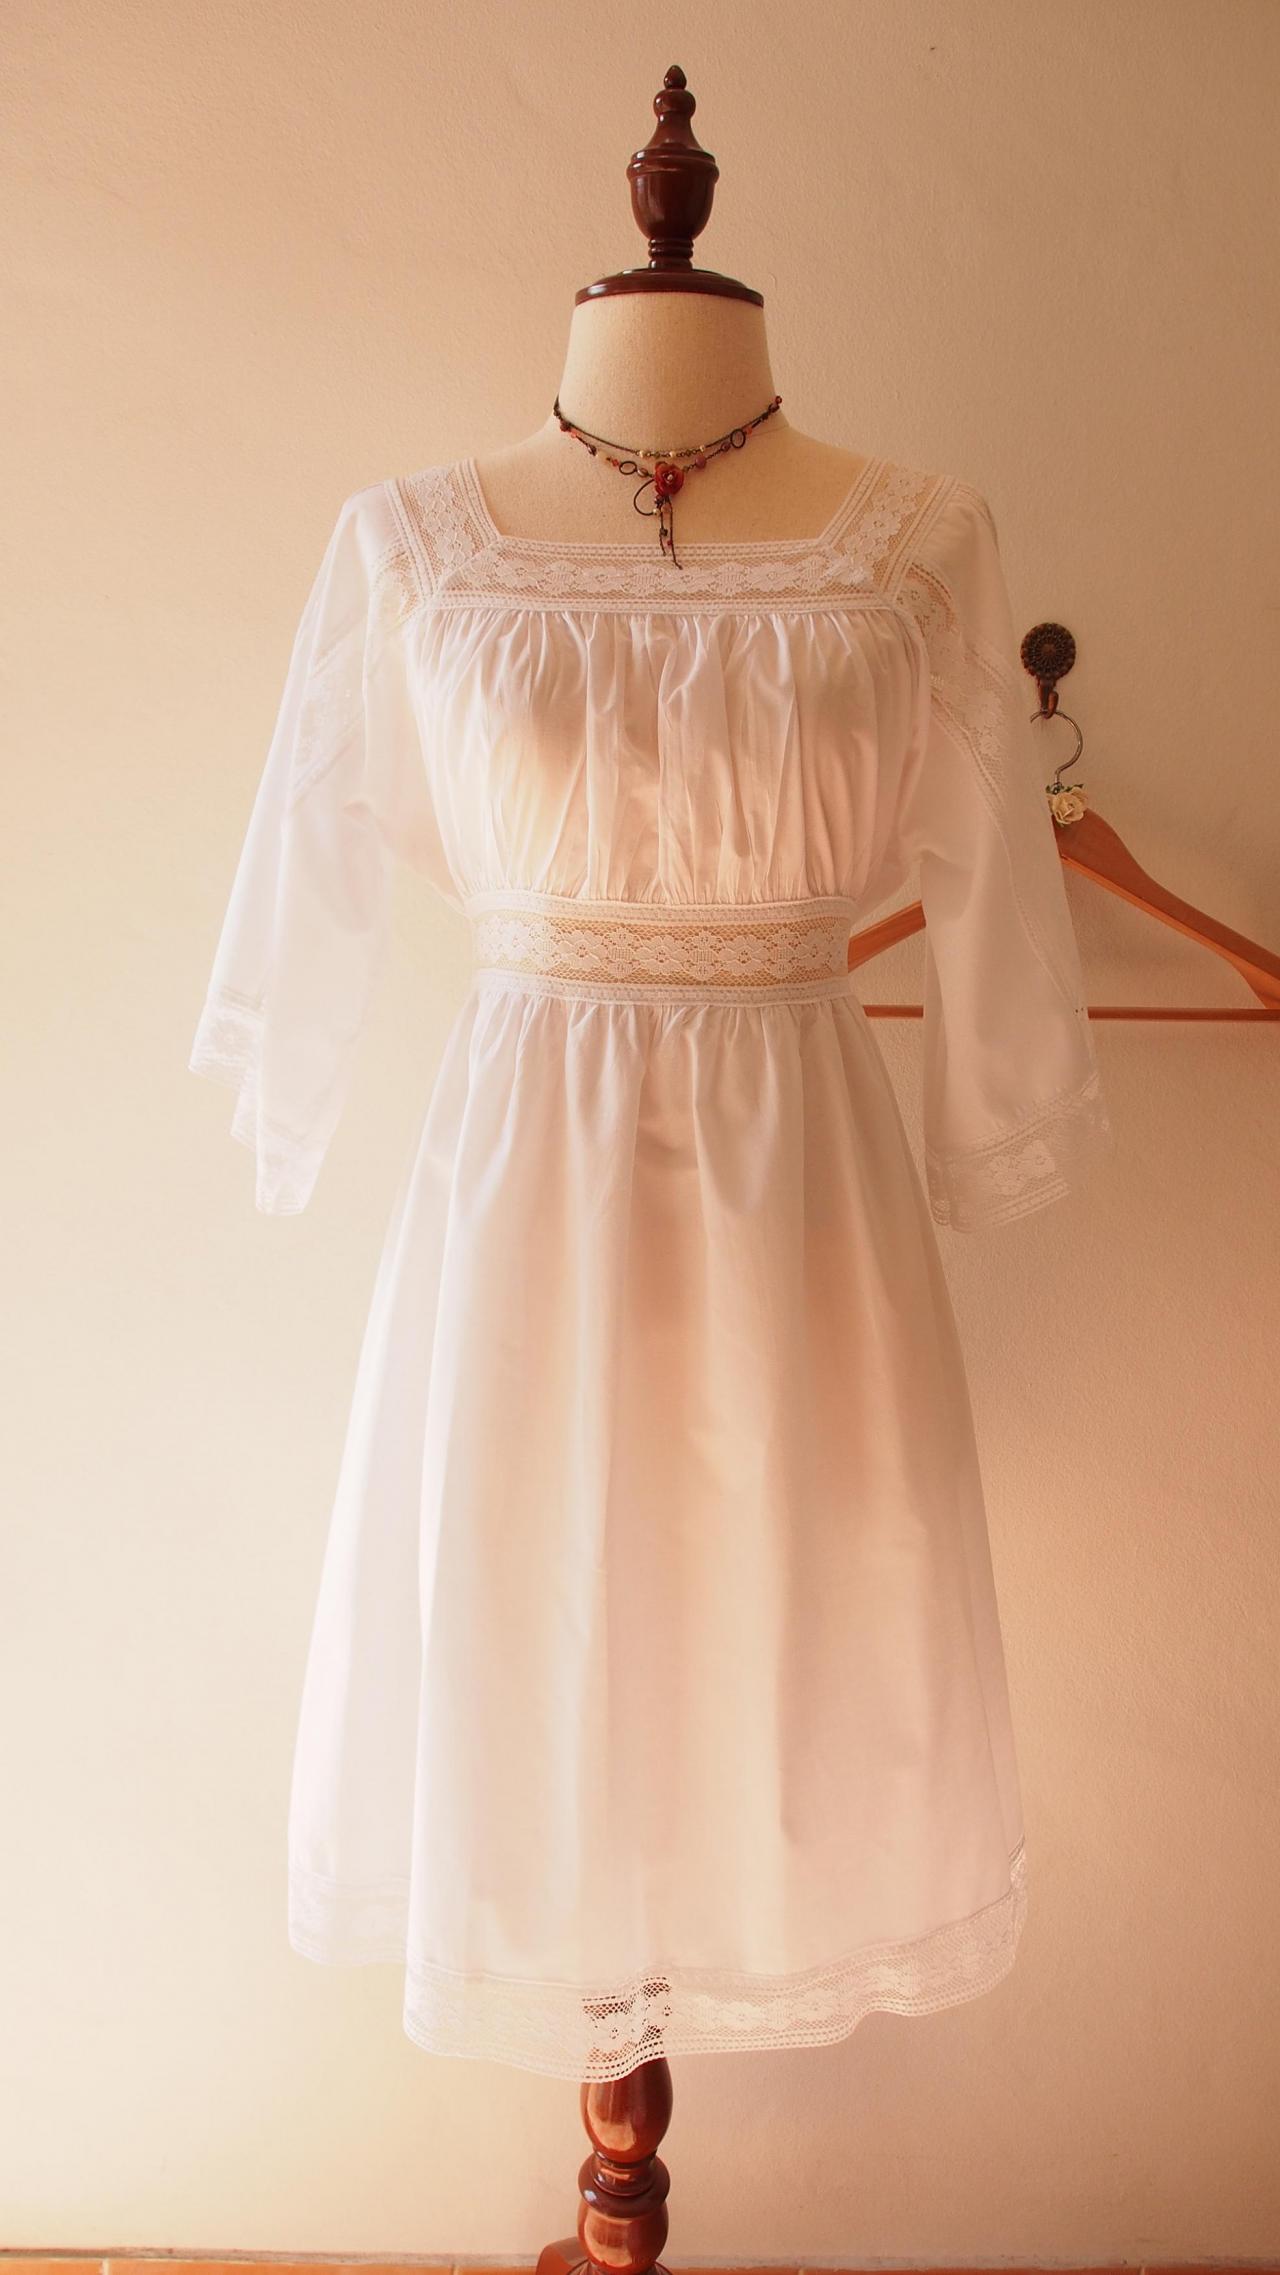 Marie Dress Beach Boho Long Dress Bohemian Rustic Wedding Party Sleeve Dress White Cotton Lace Birthday Anniversary Victorian Dress